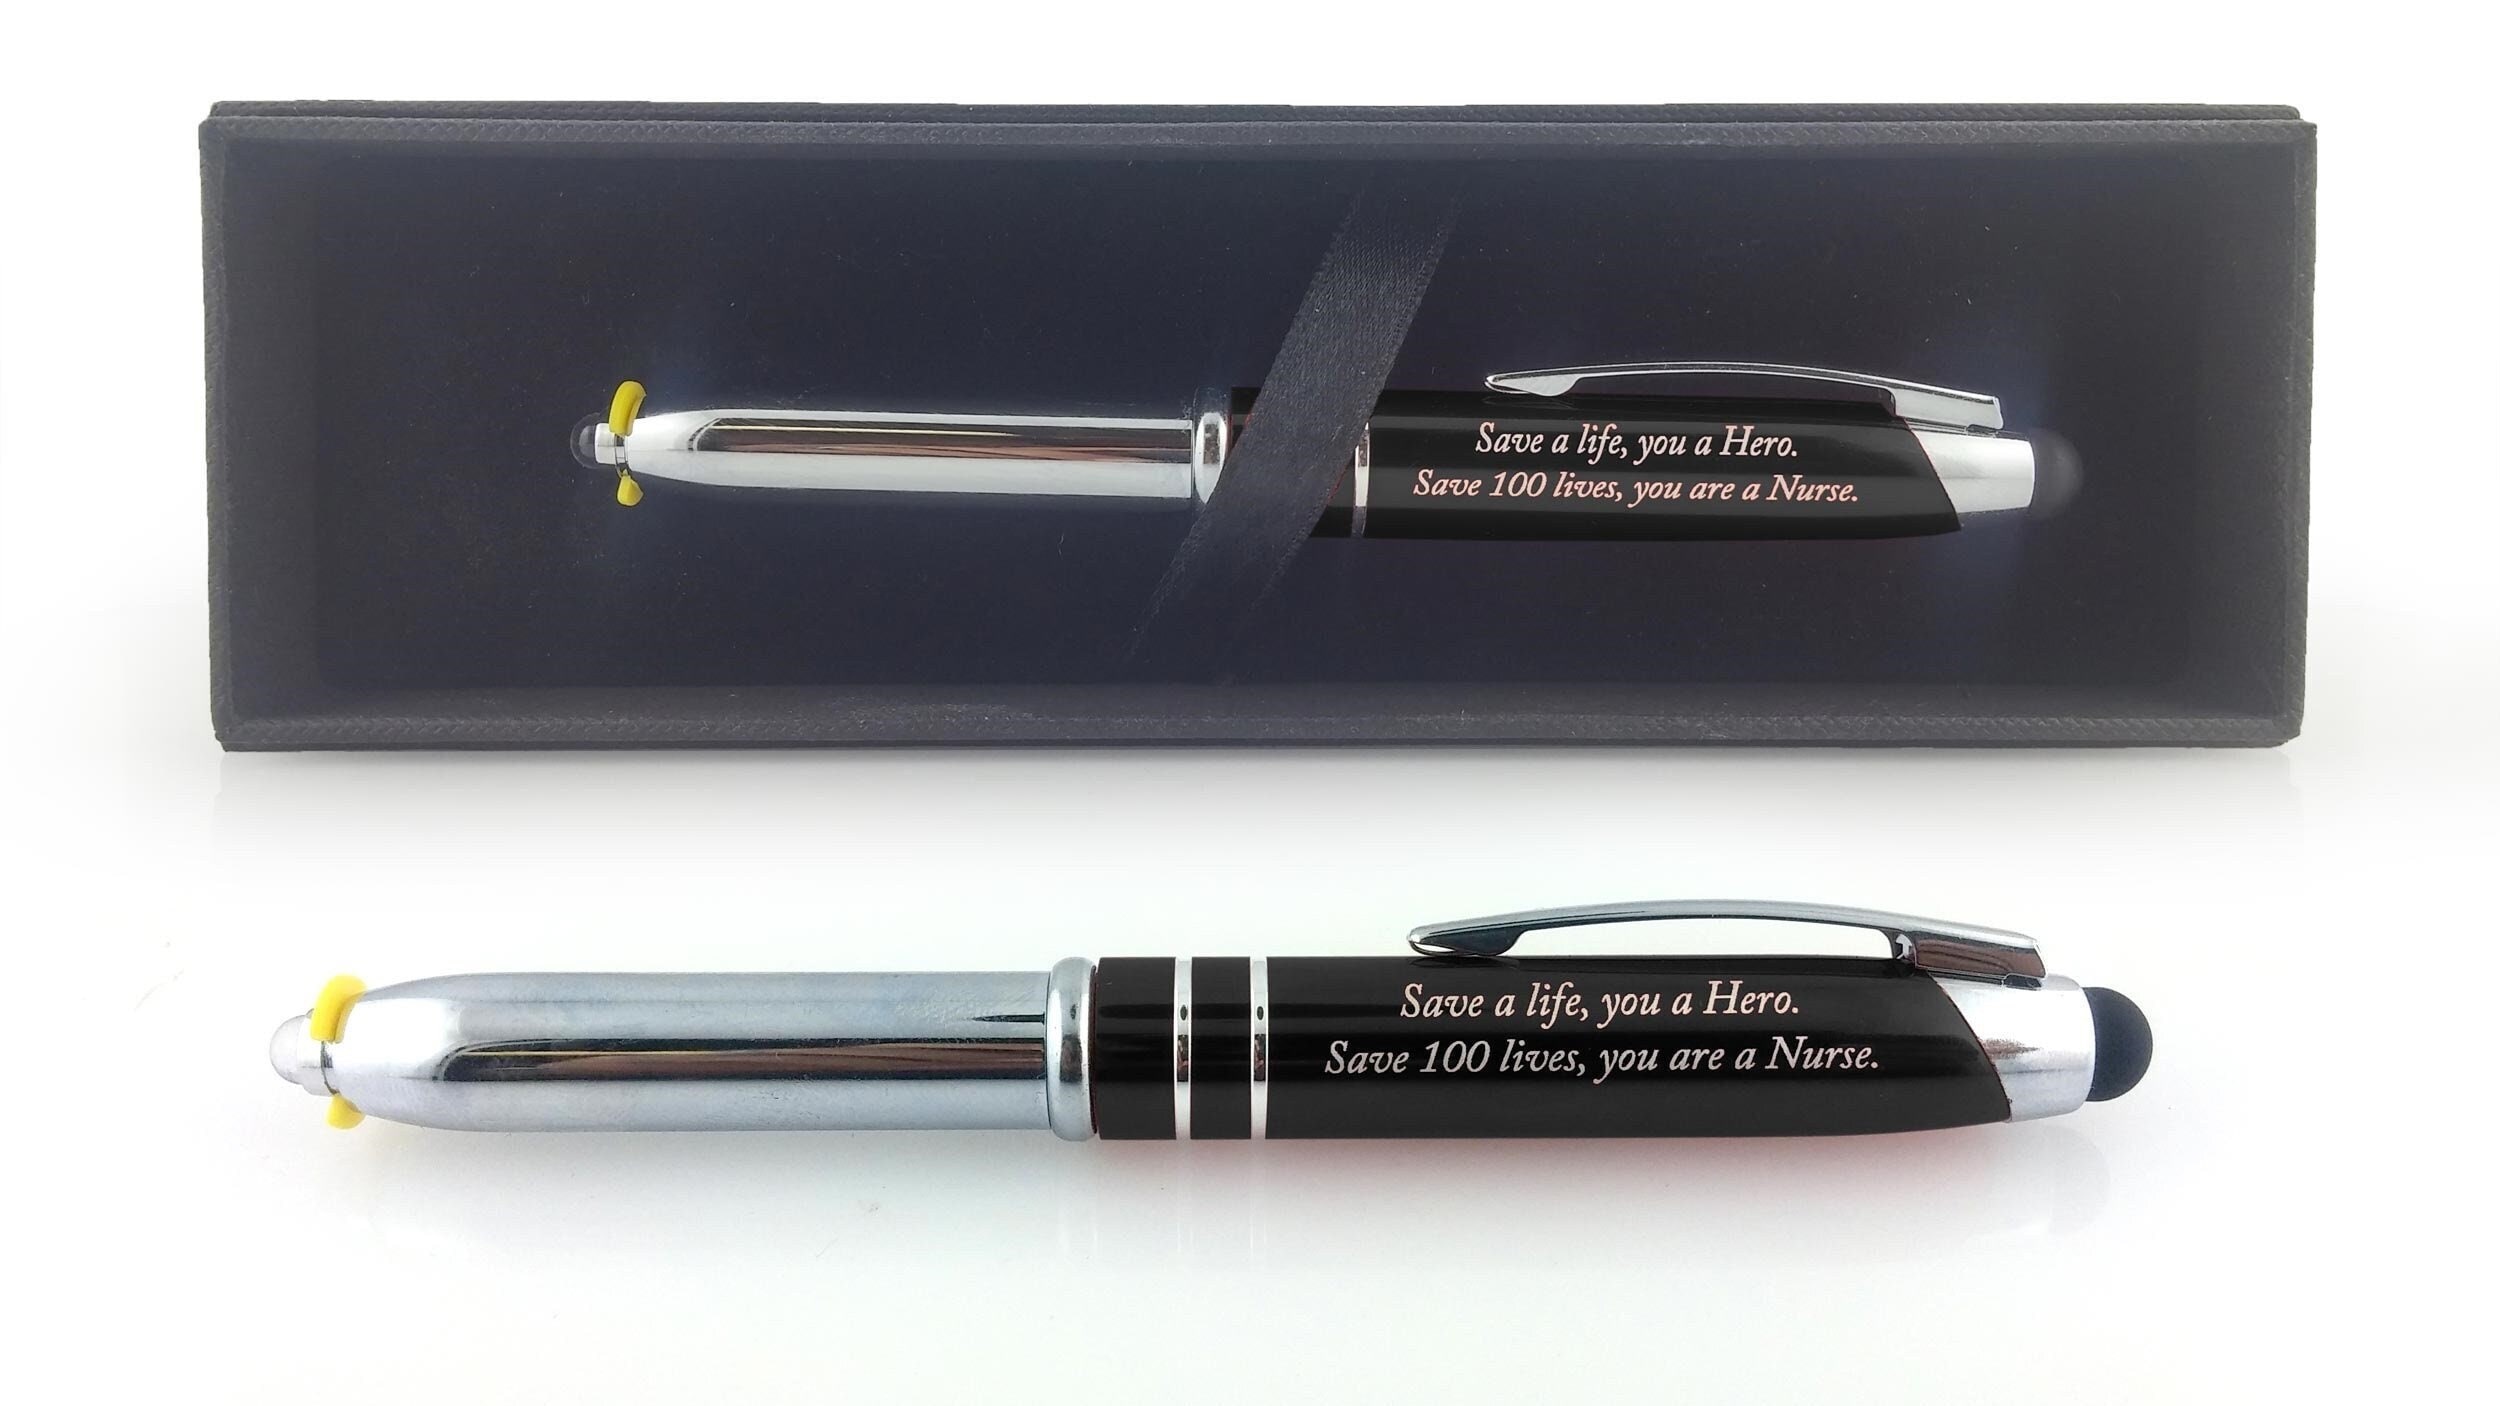 Personalized Pens Ink Joy Pen Pack With Monogram for Teachers, Nurses, Work  